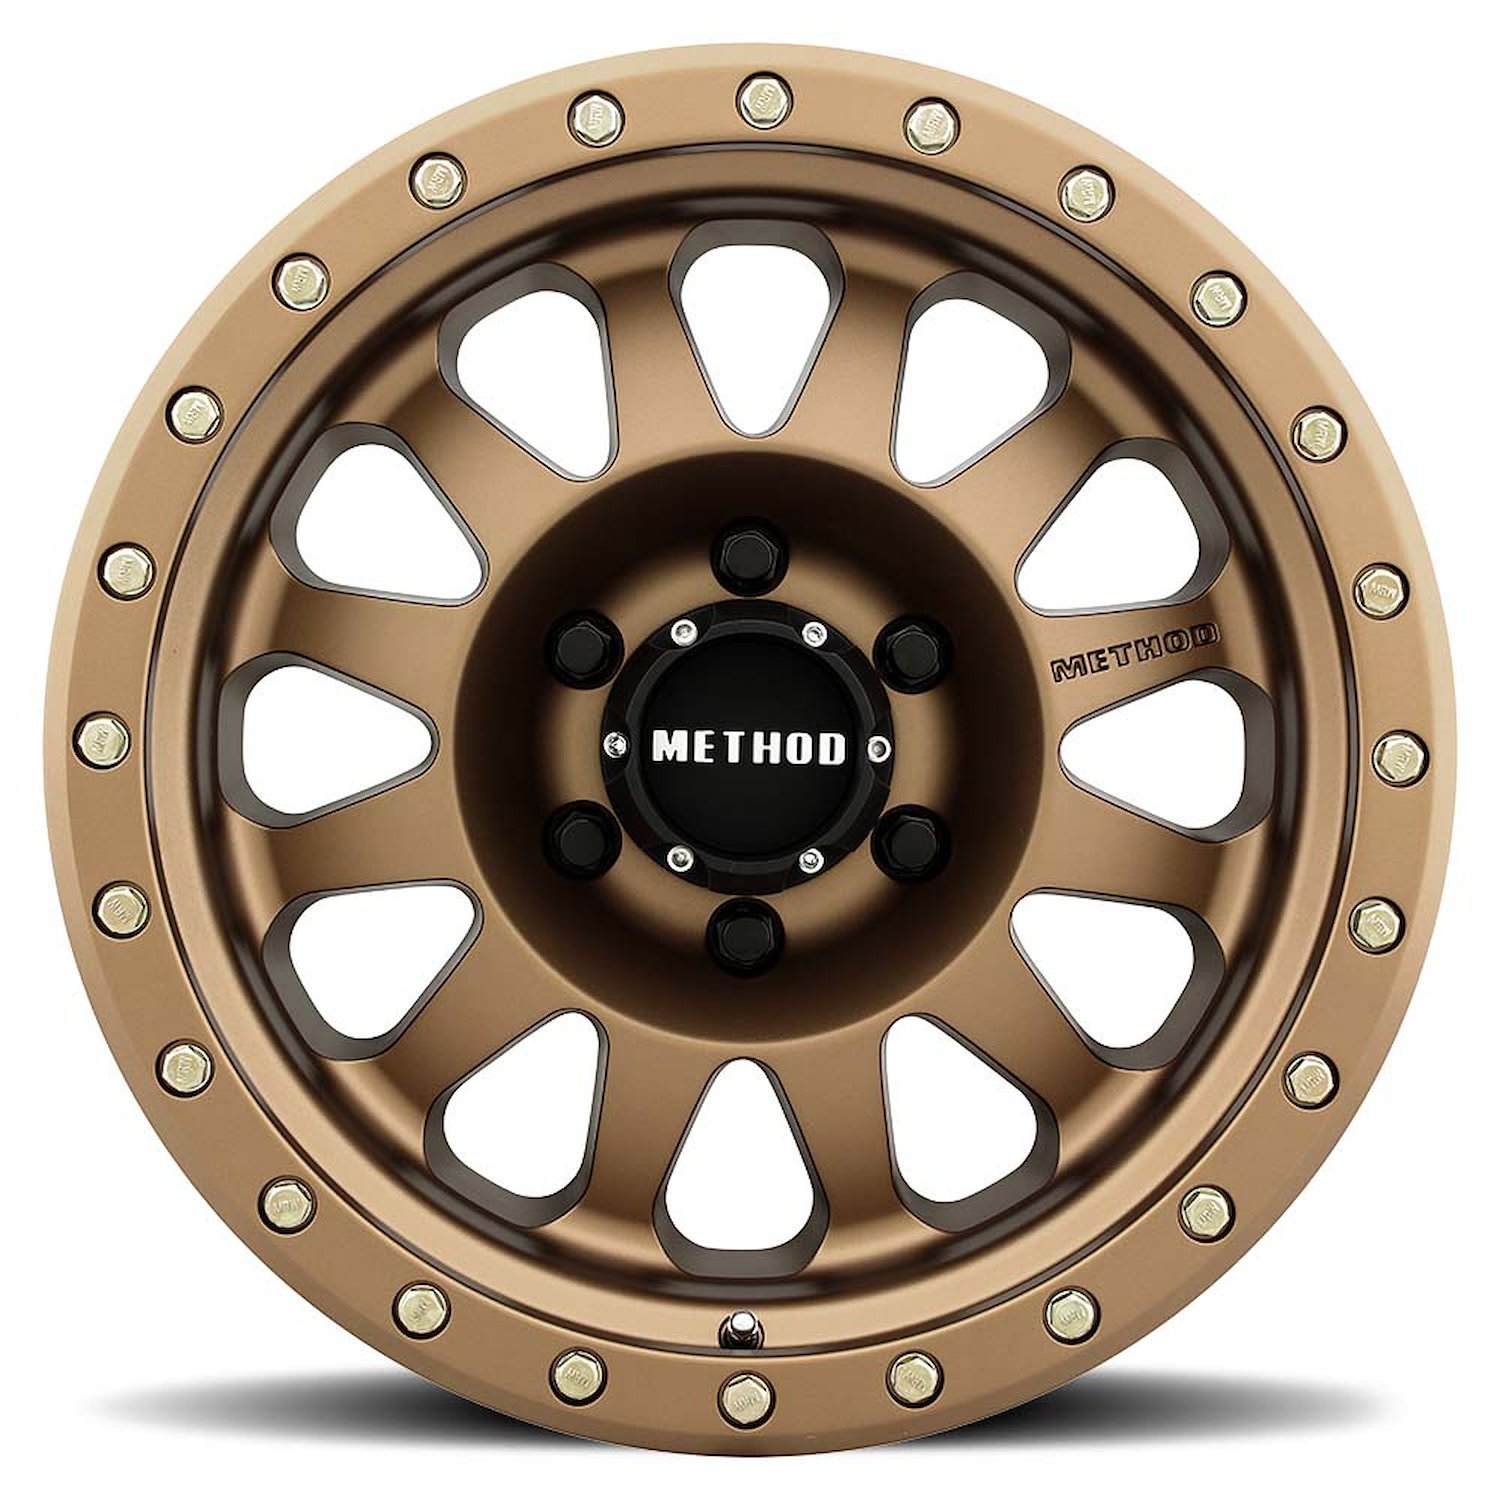 MR30478560900 STREET MR304 Double Standard Wheel [Size: 17" x 8.5"] Method Bronze